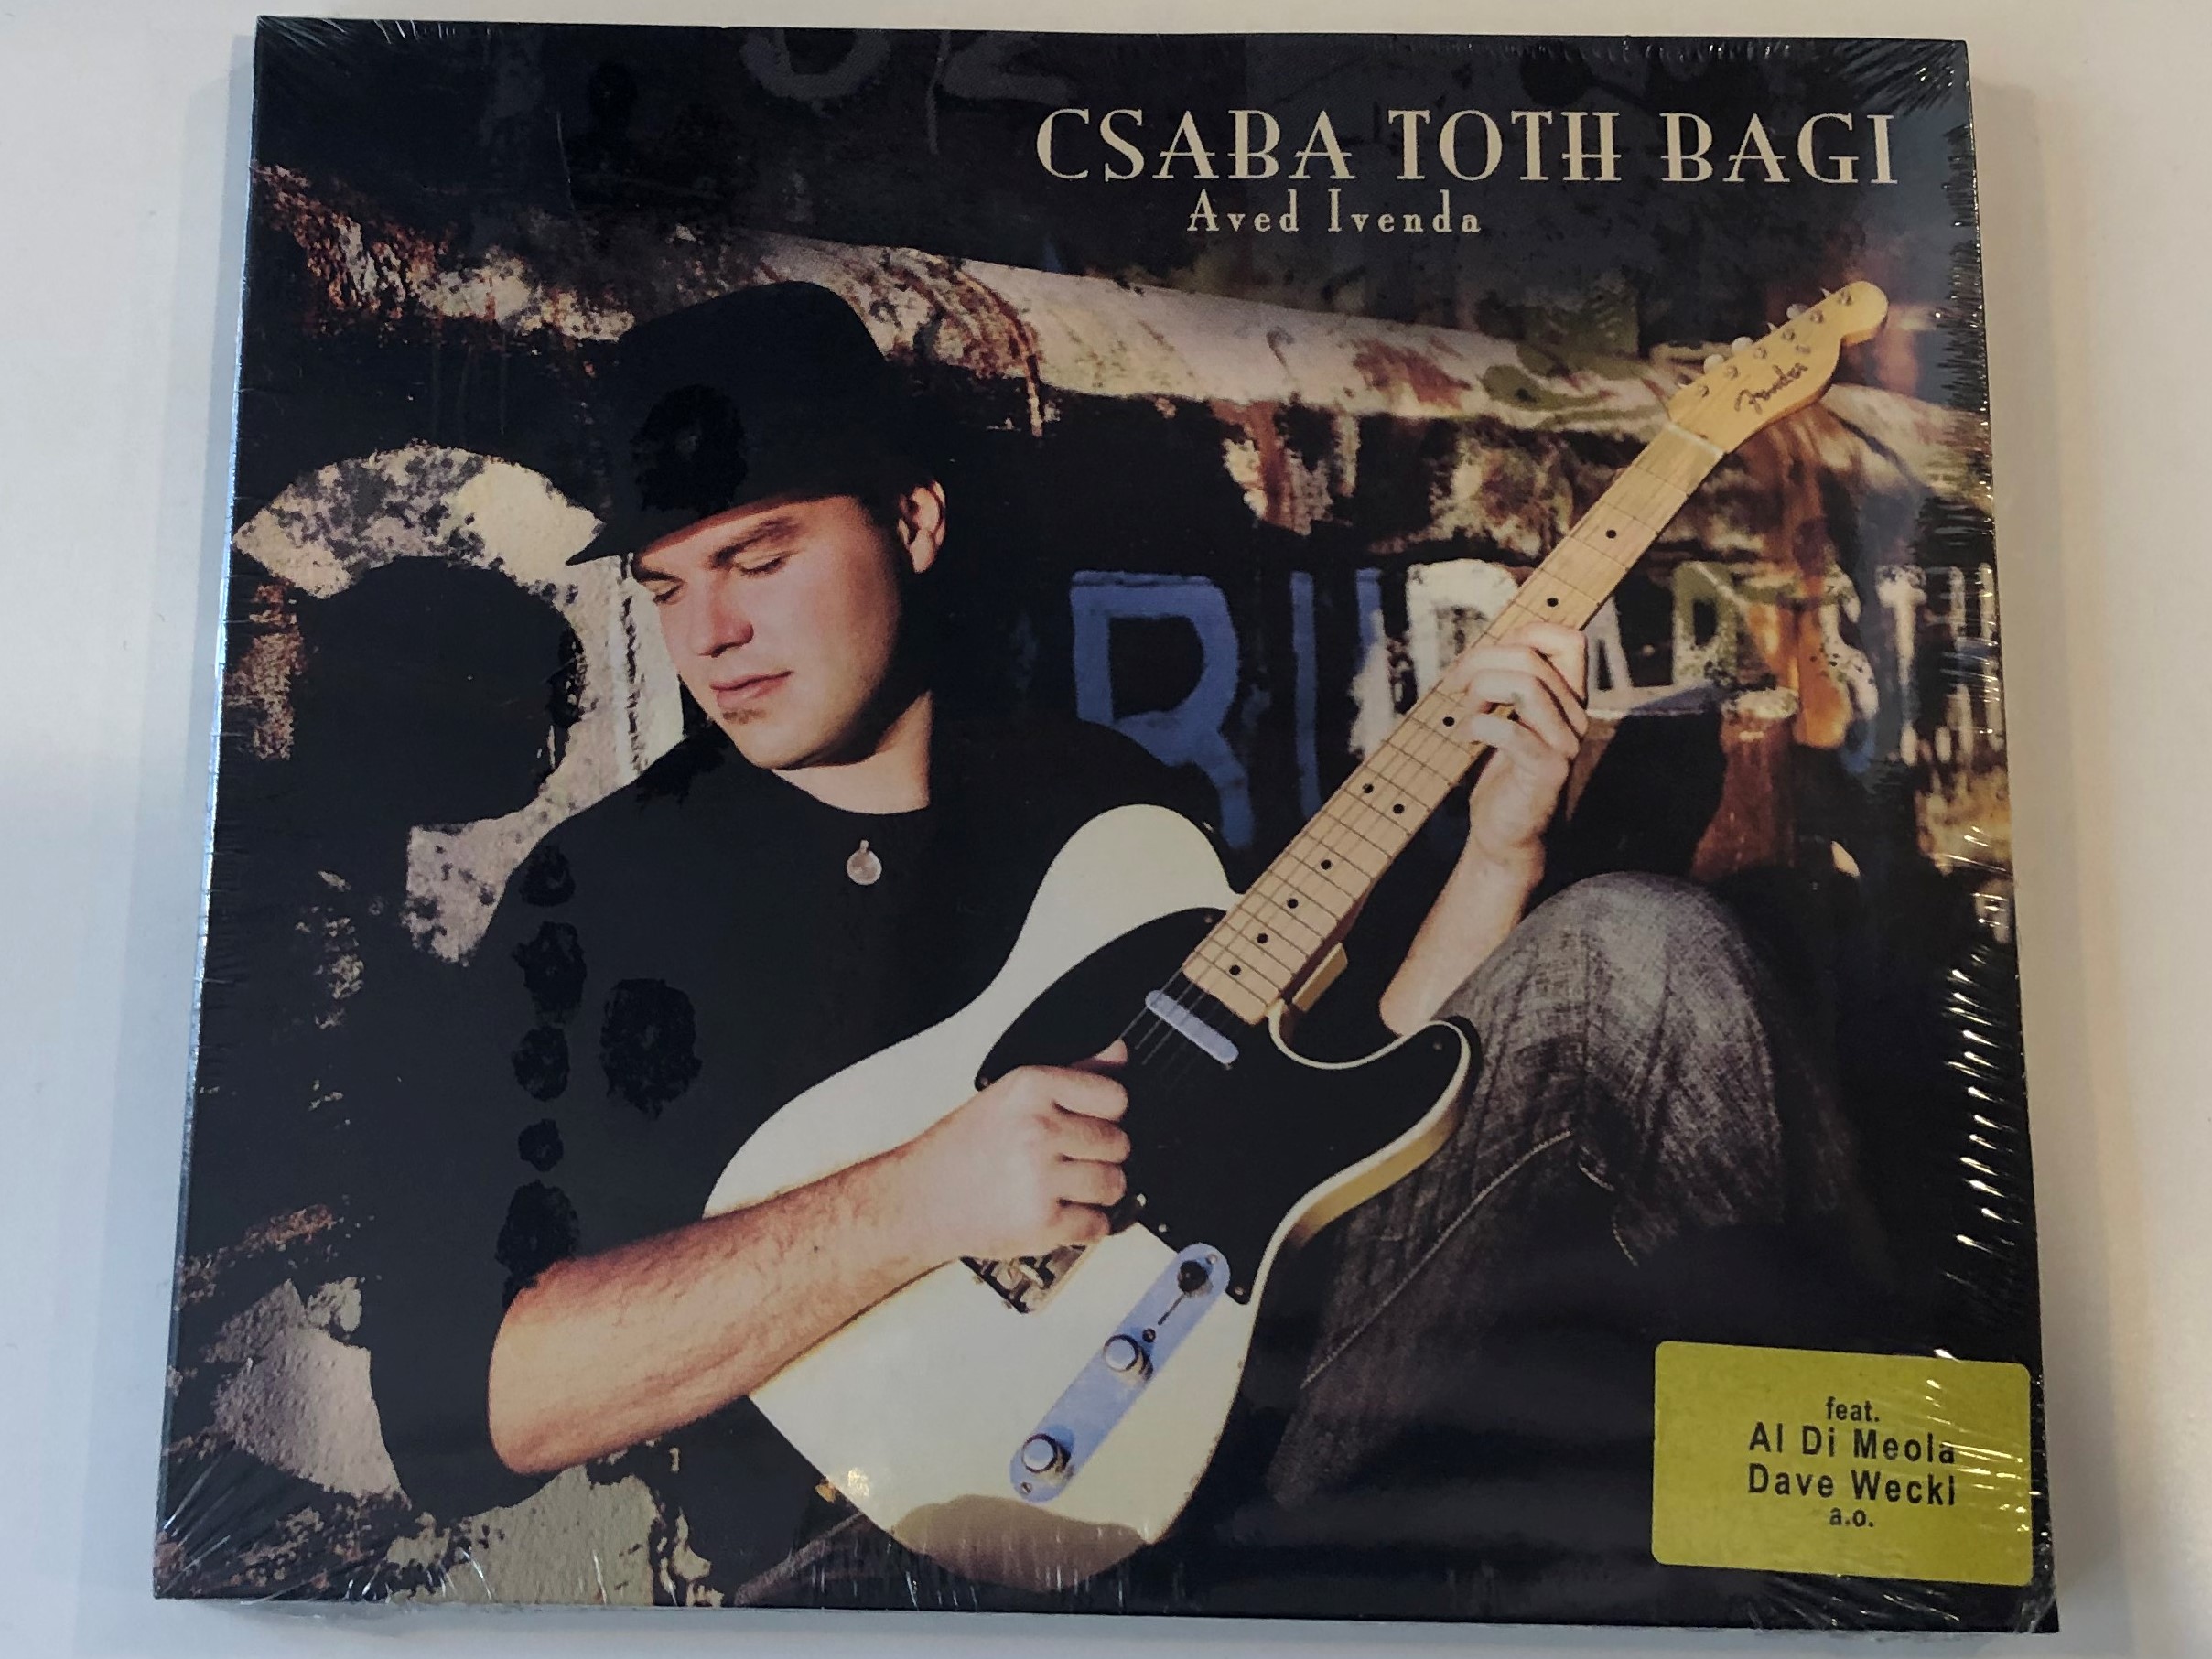 csaba-toth-bagi-aved-ivenda-feat.-al-di-meola-dave-wecki-enja-records-audio-cd-2011-enj-9579-2-1-.jpg